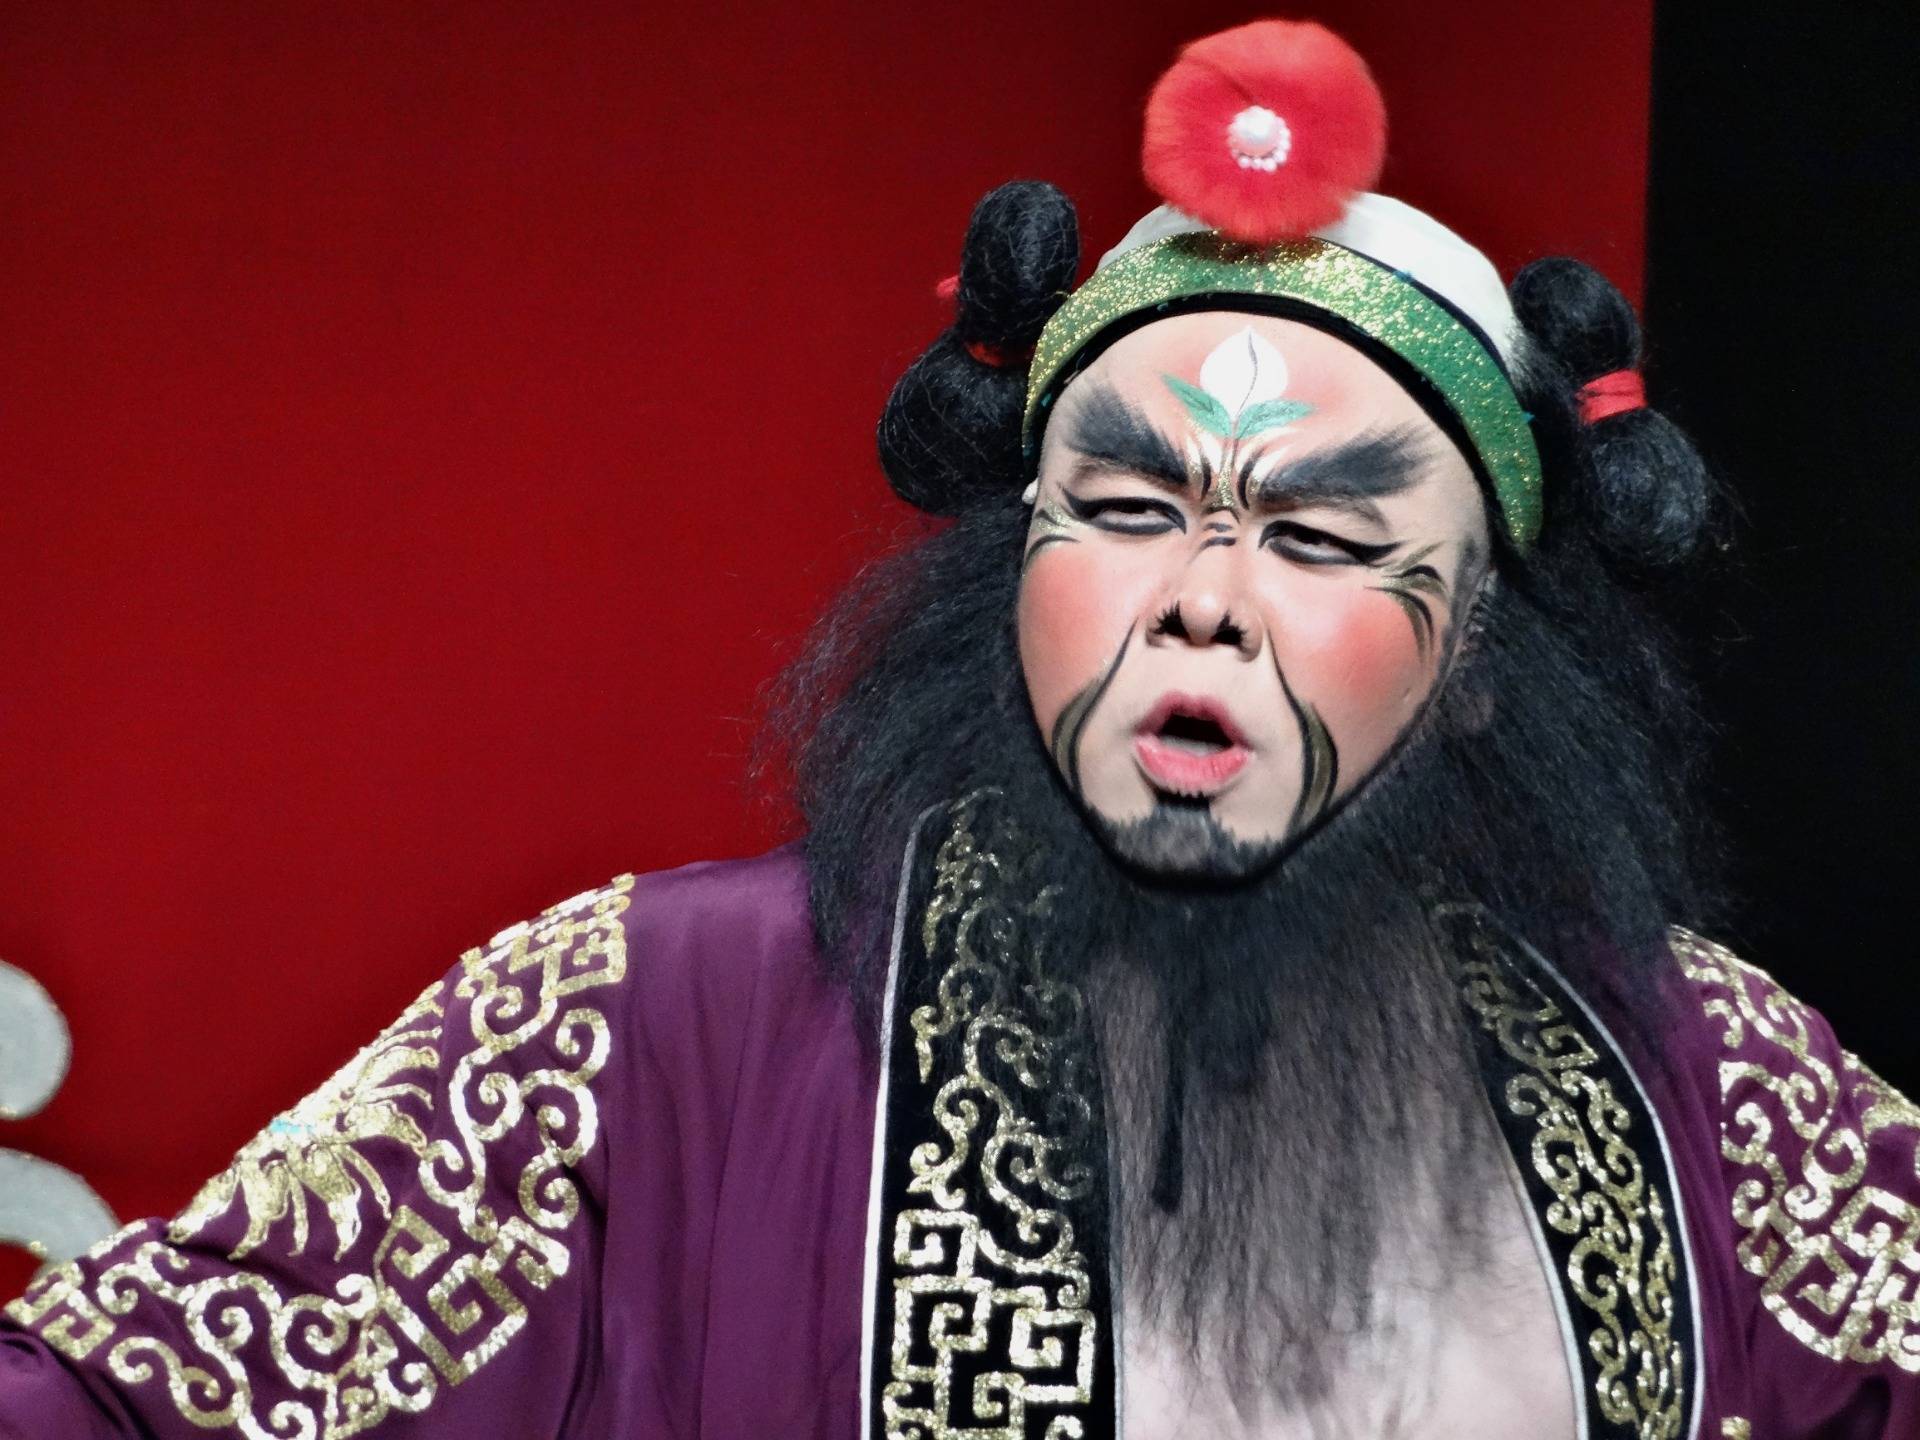 Taiwan: A night at the strangest opera